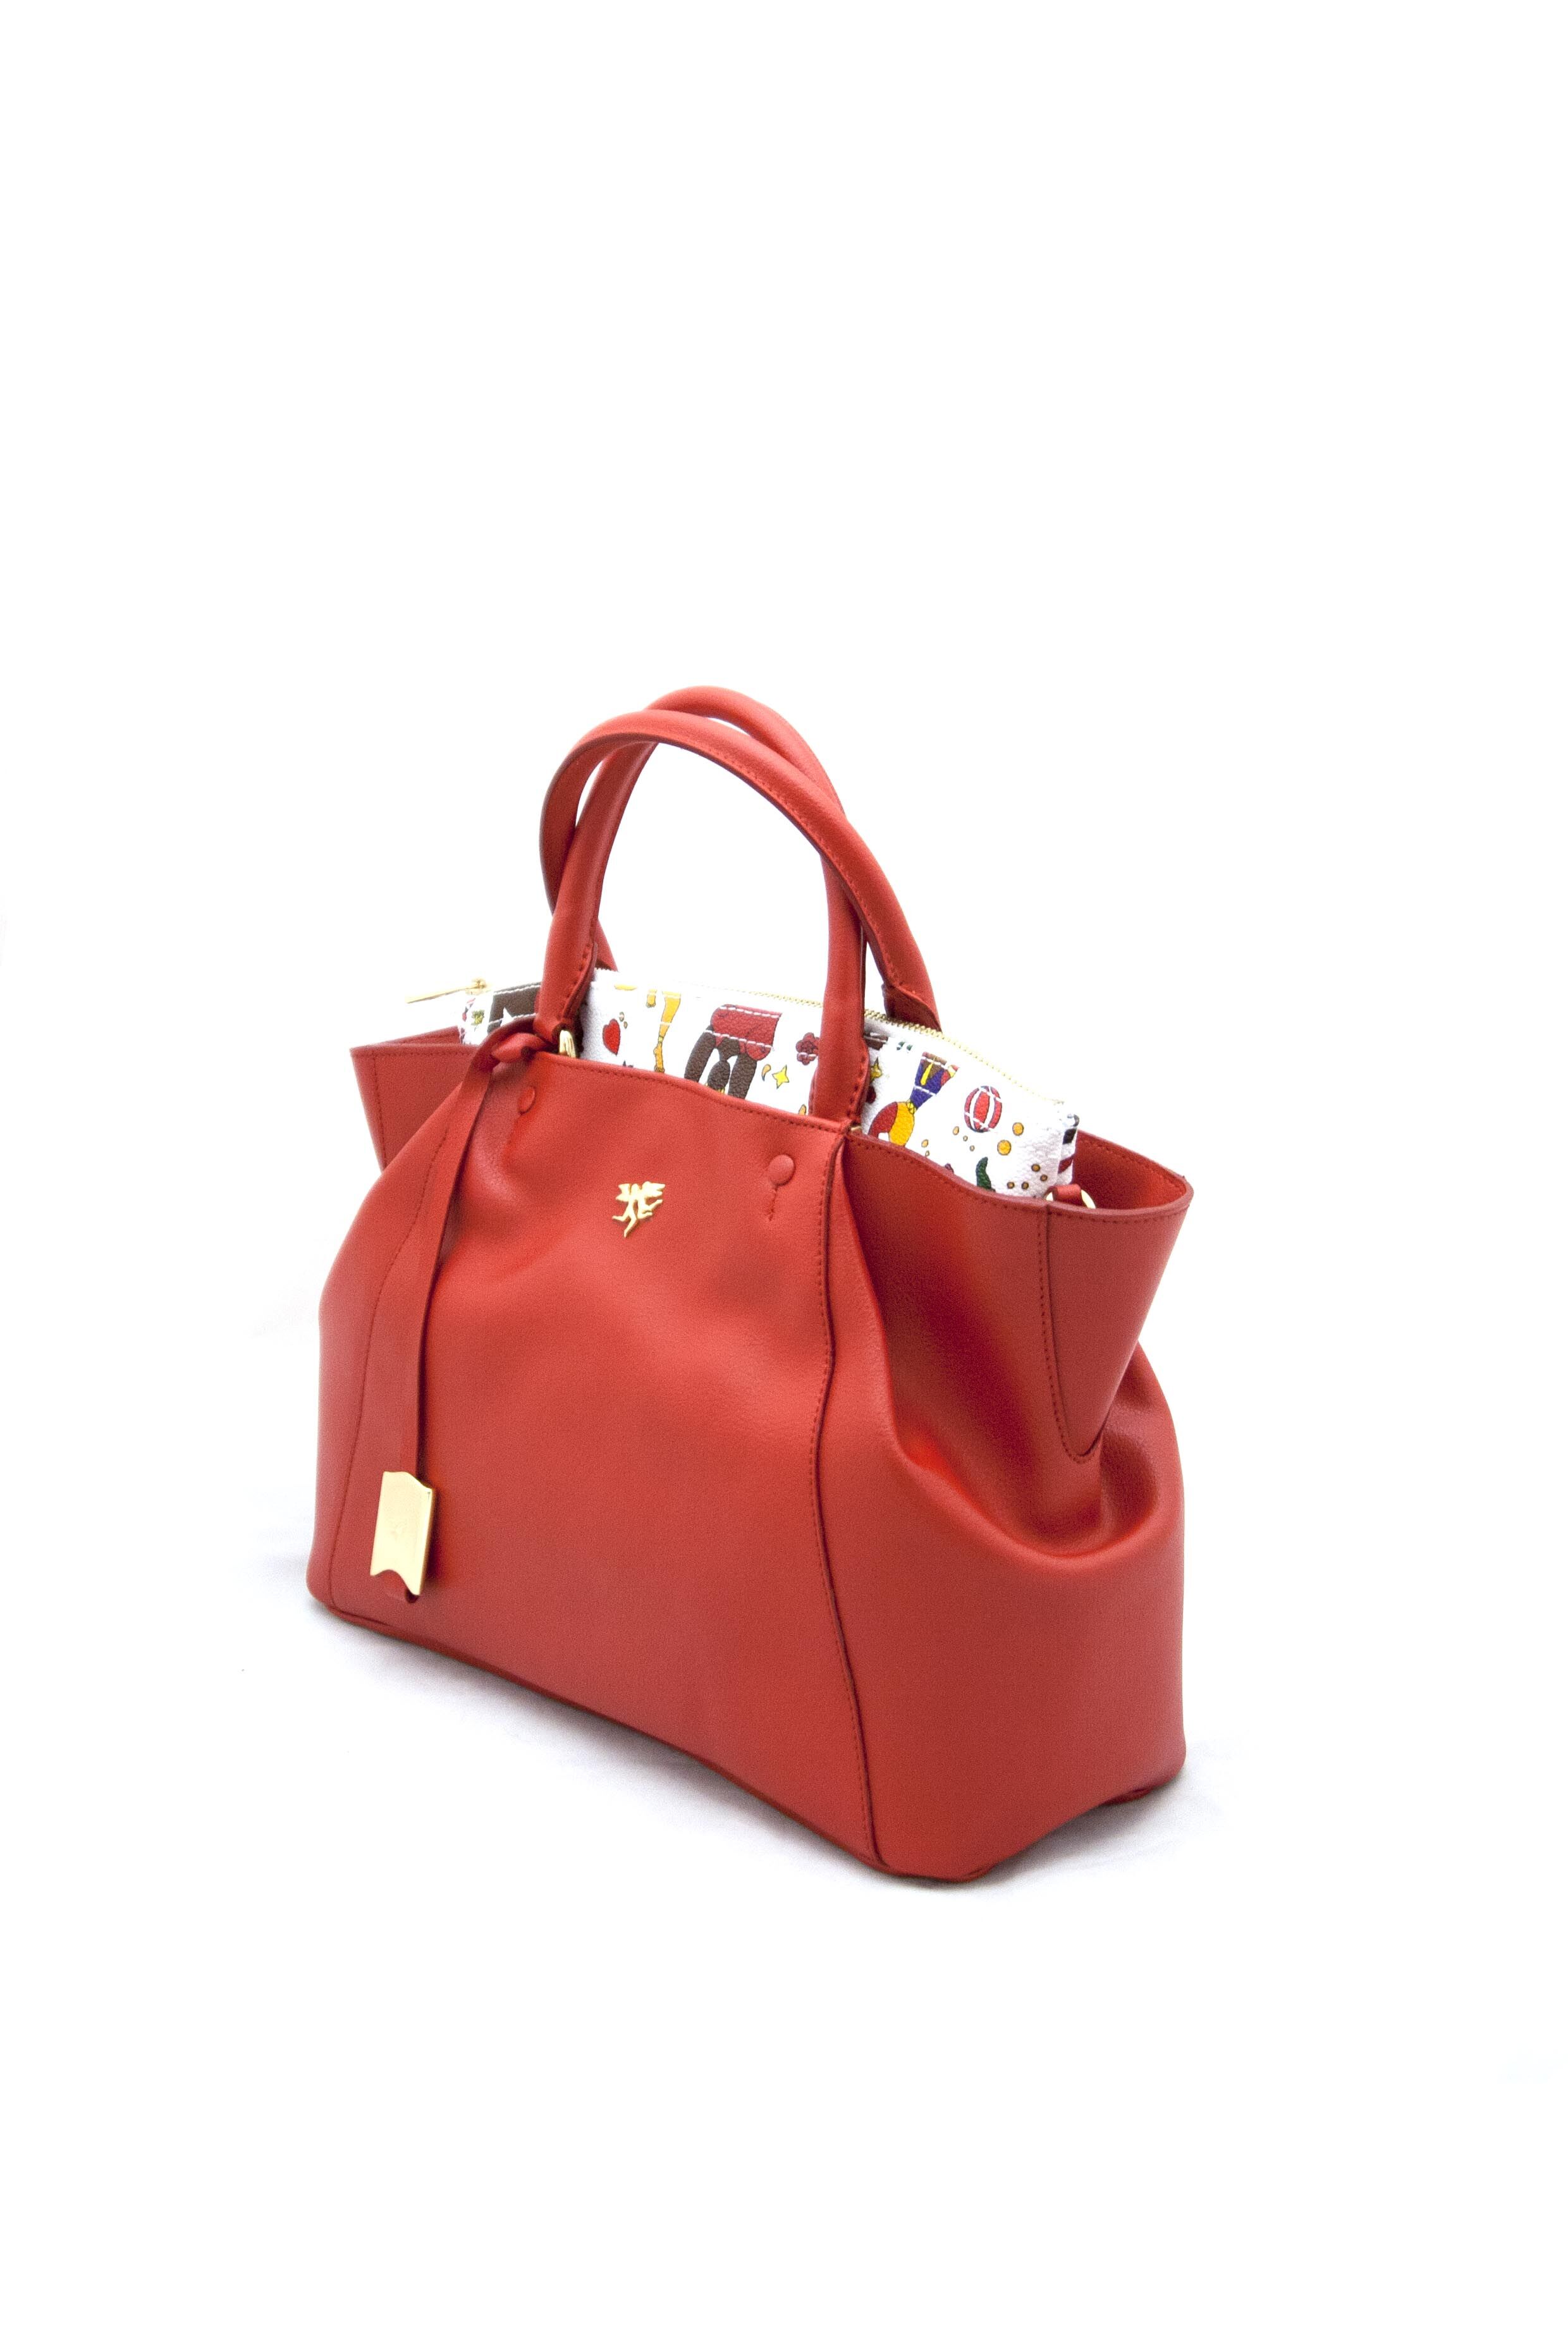 Piero Guidi Authenticated Leather Handbag